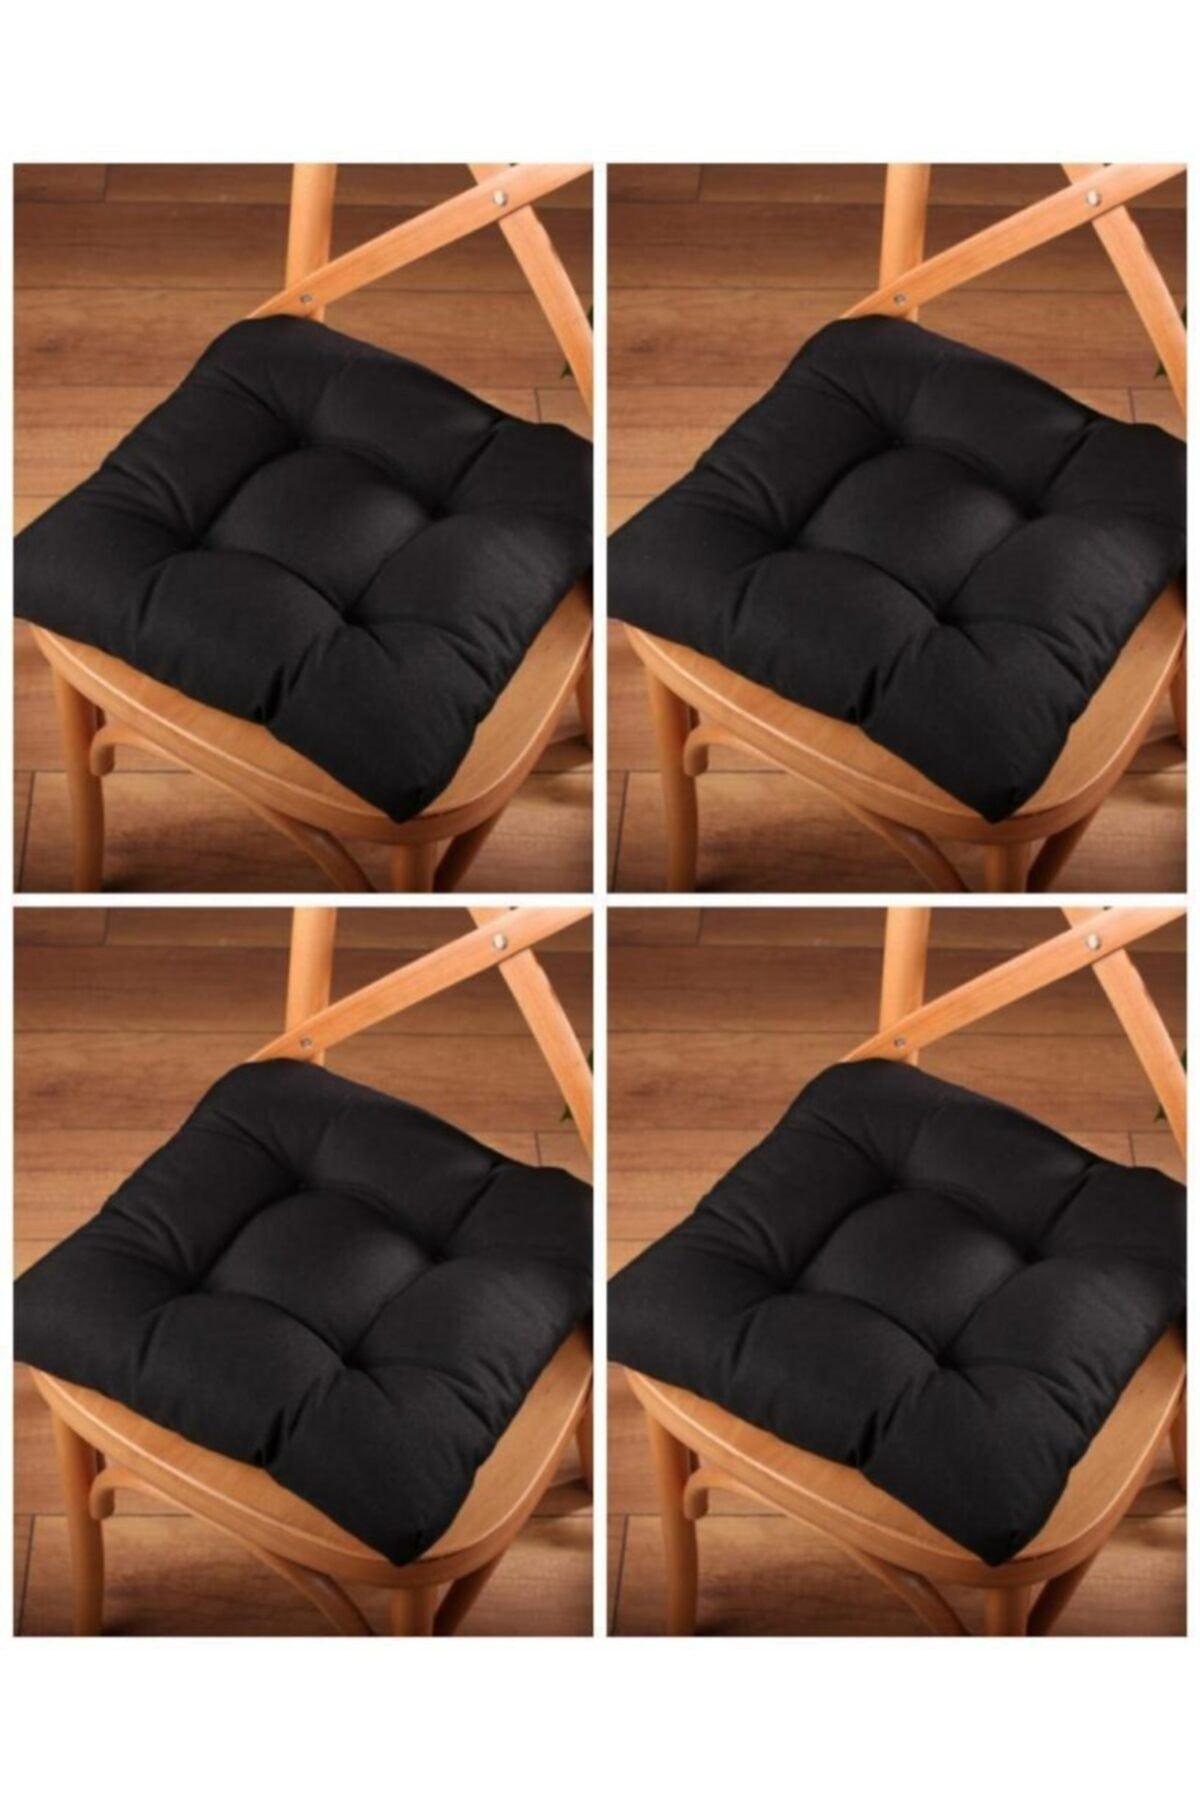 4 Lux Pofidik Black Chair Cushion Special